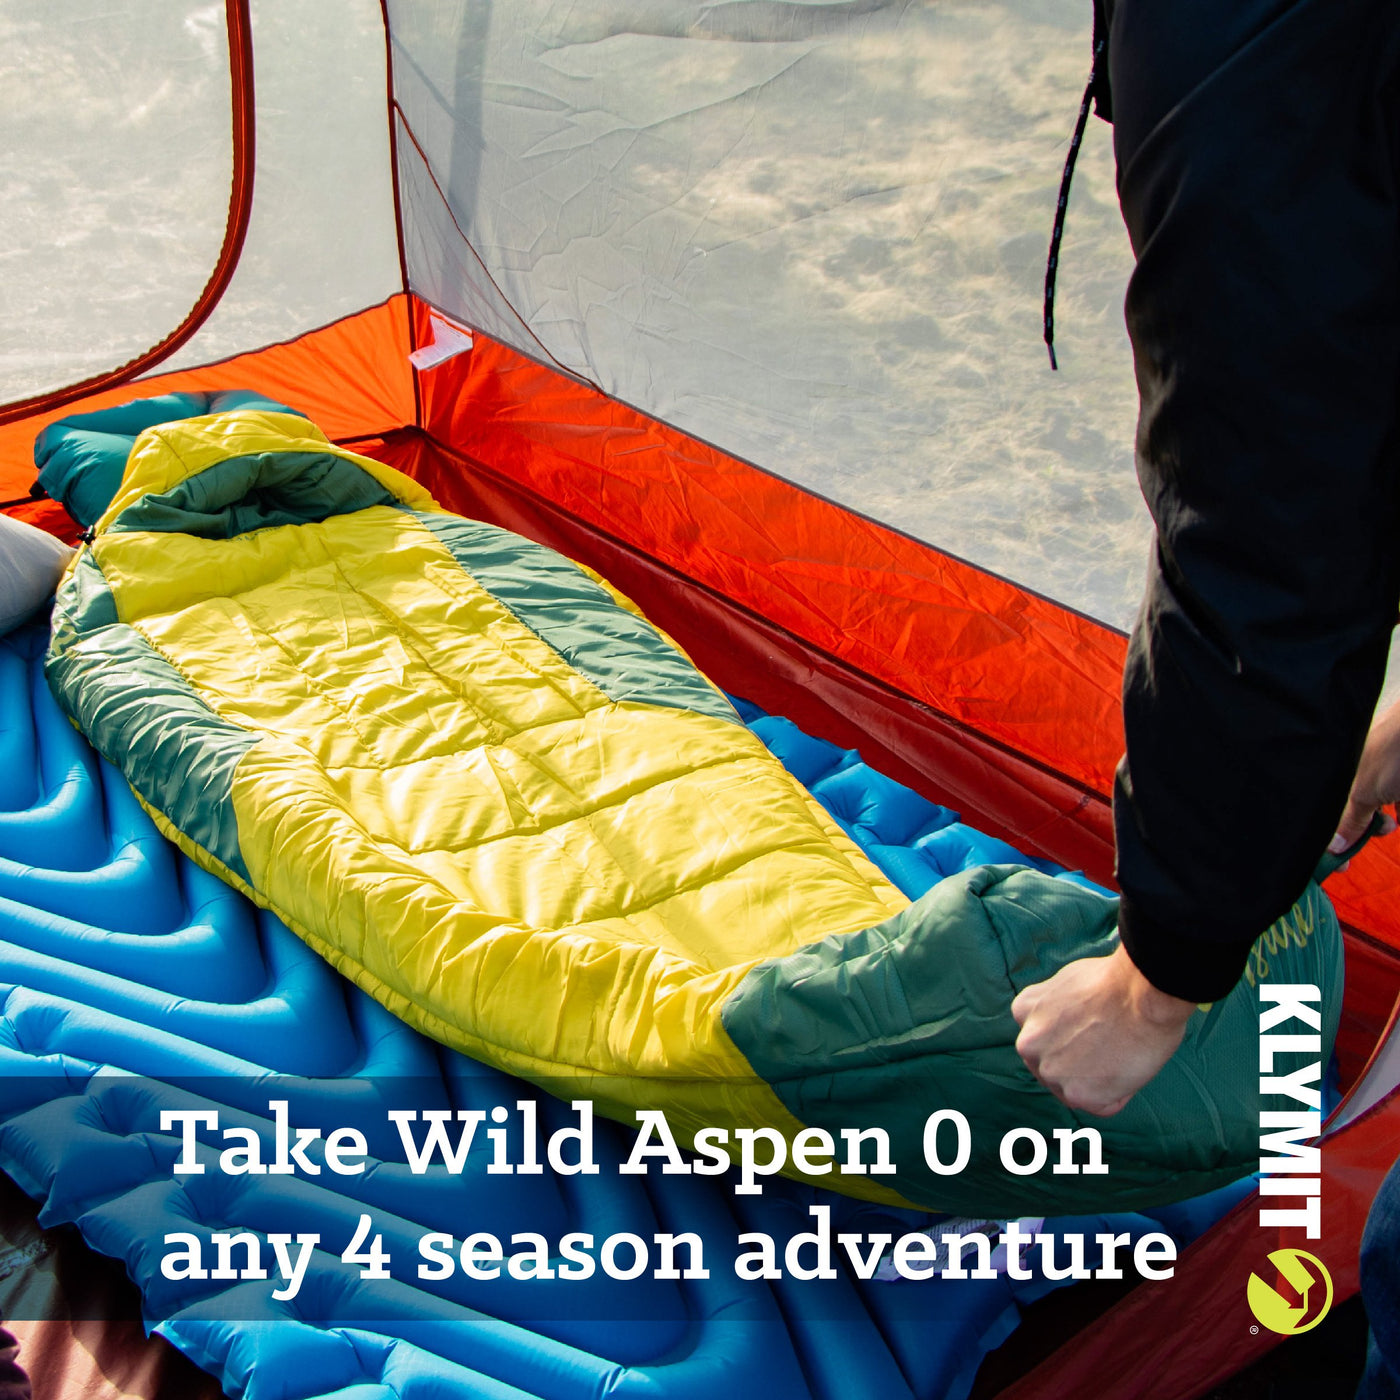 Wild Aspen 0 Sleeping Bags by Klymit - Peak Outdoors - Klymit -